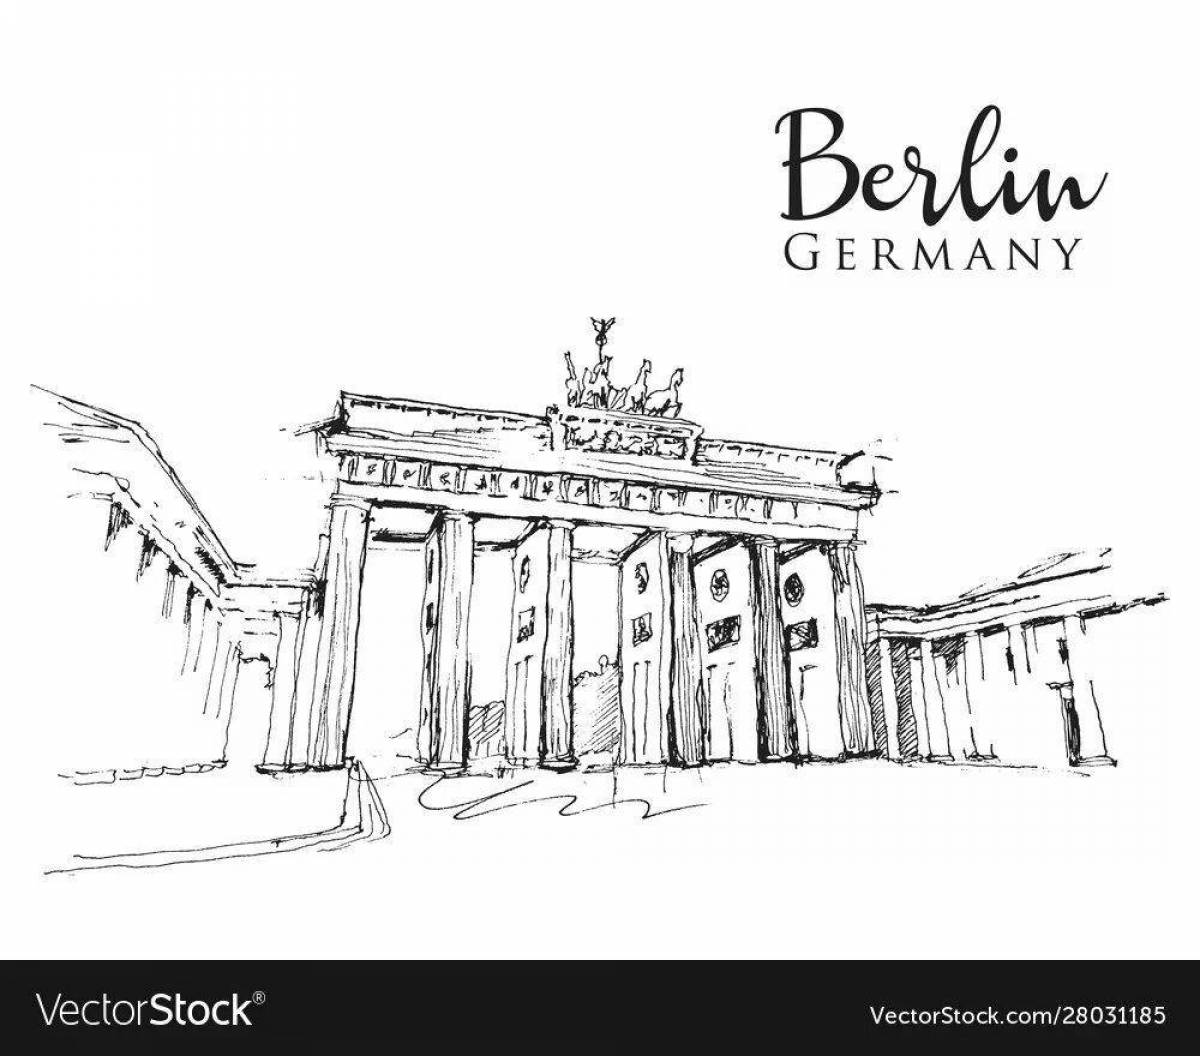 Coloring page of the grandiose Brandenburg Gate